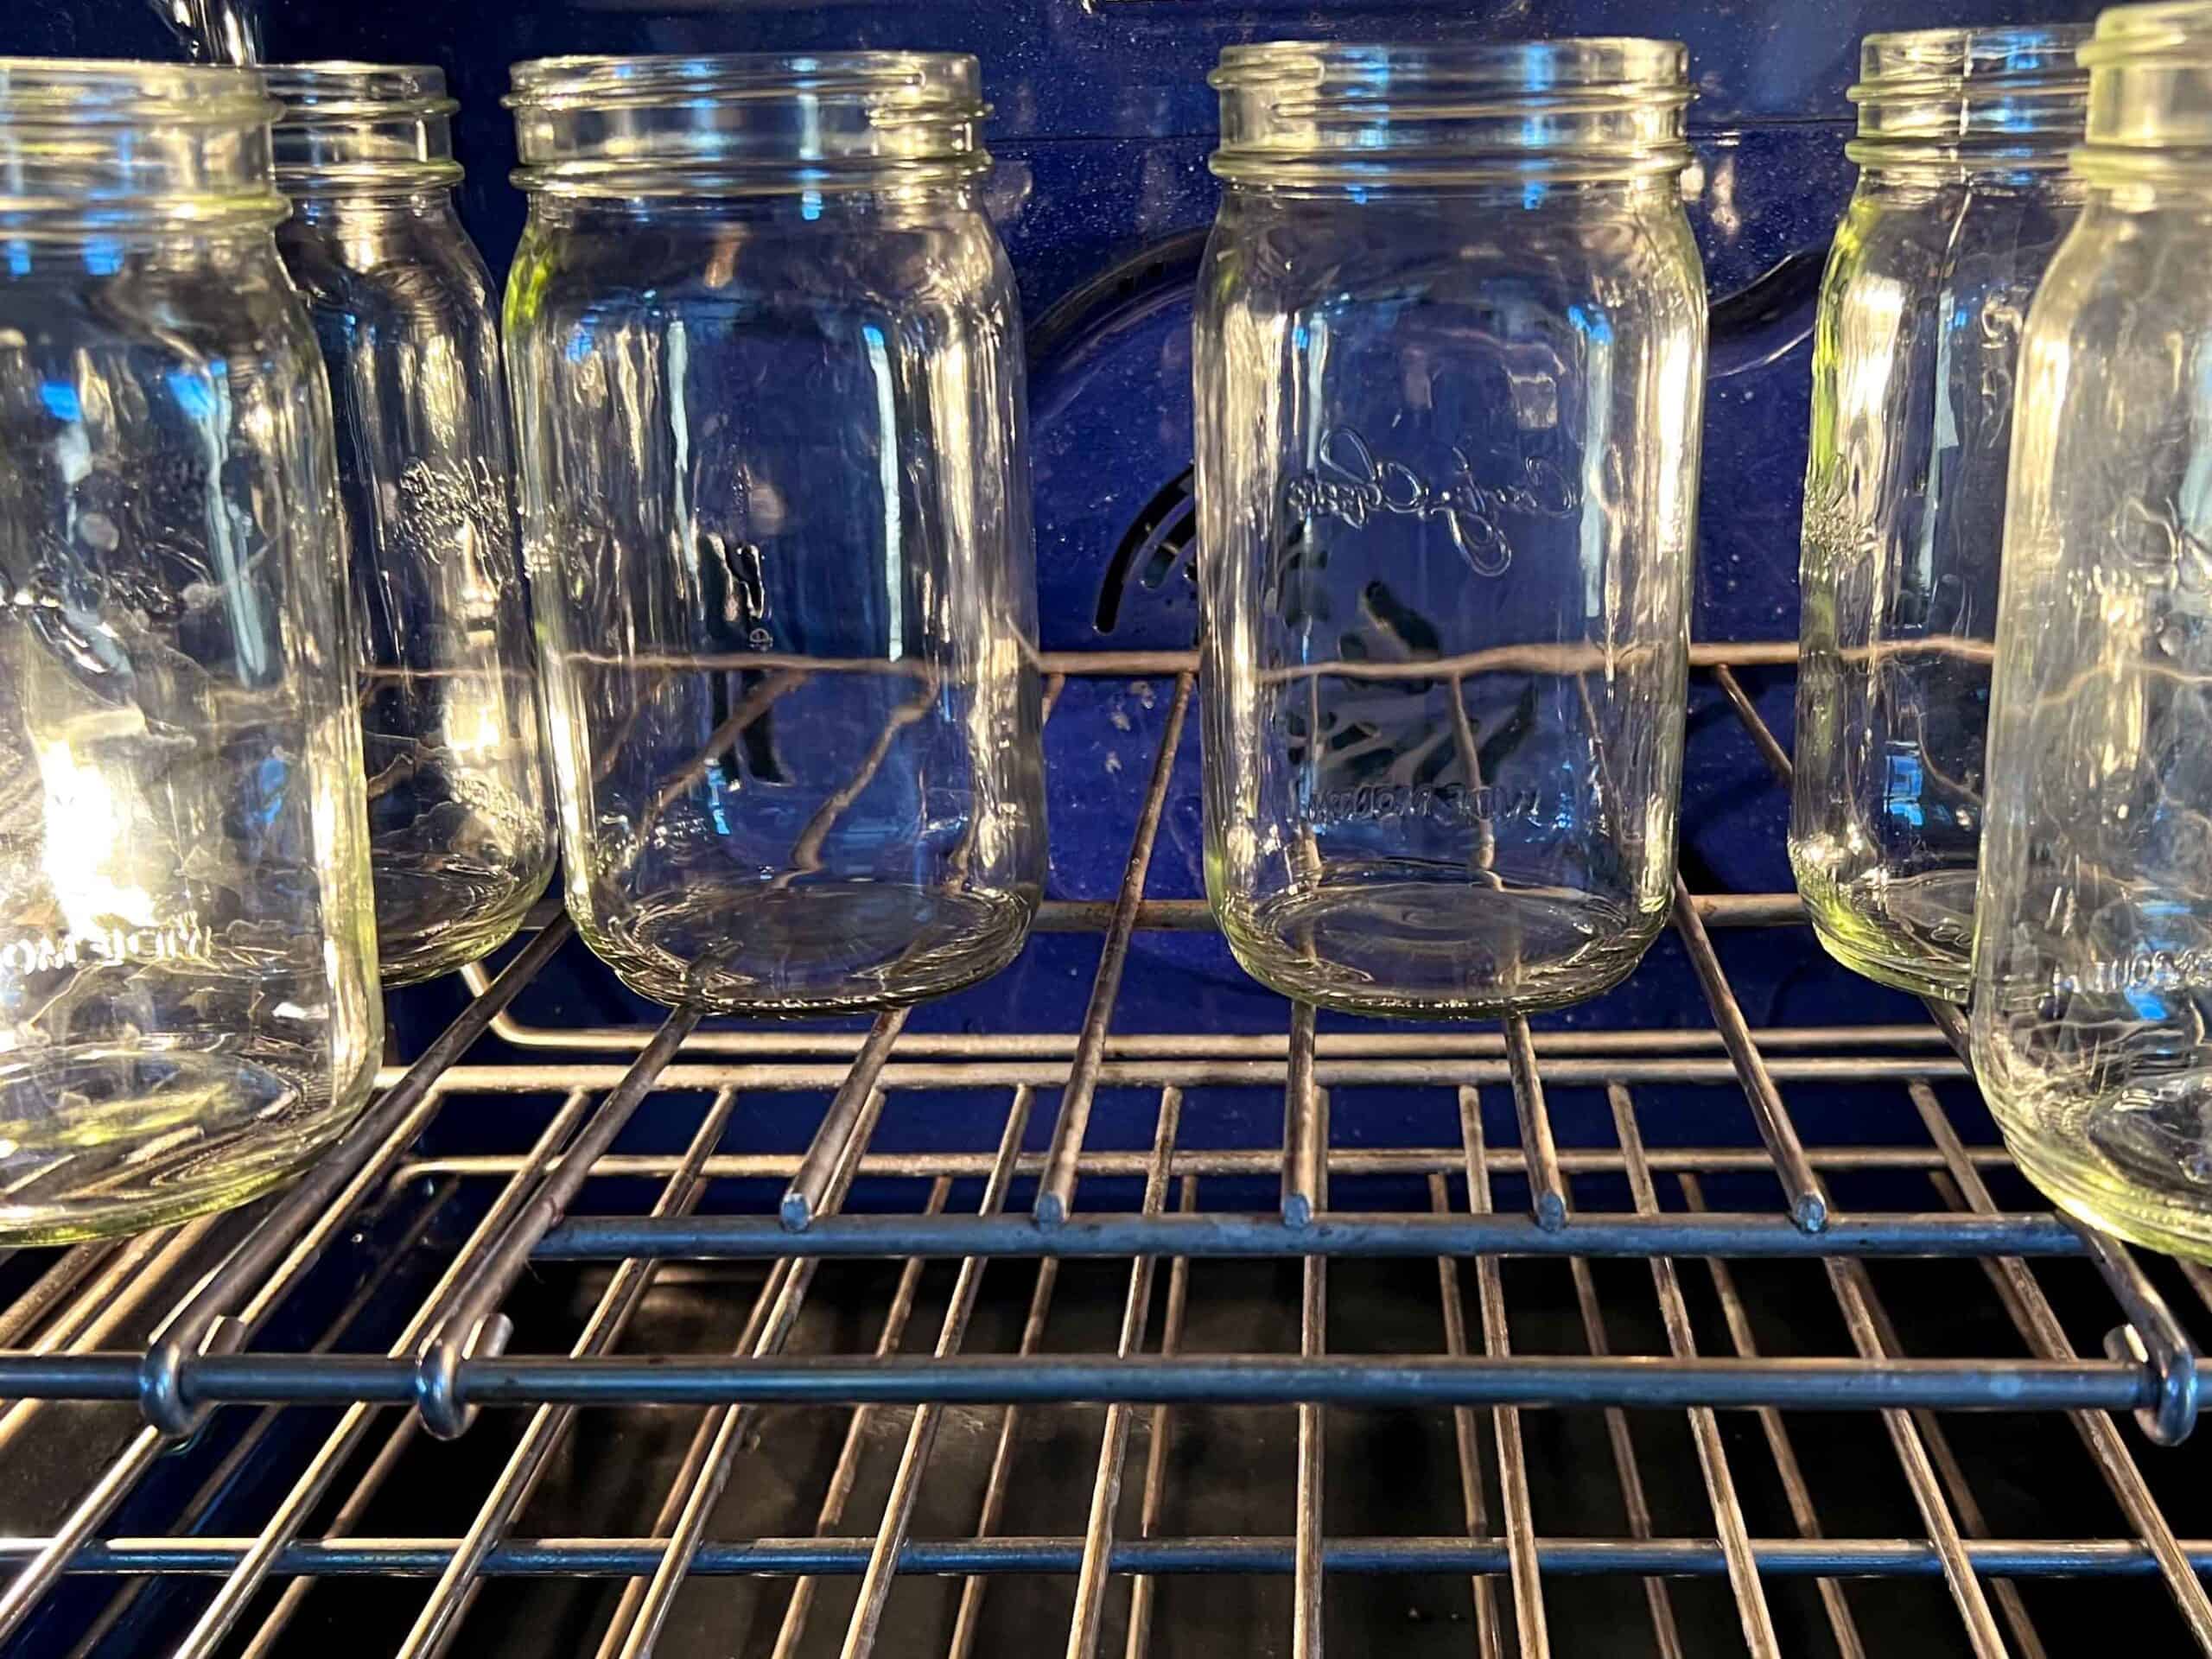 Sterilizing jars in the oven.